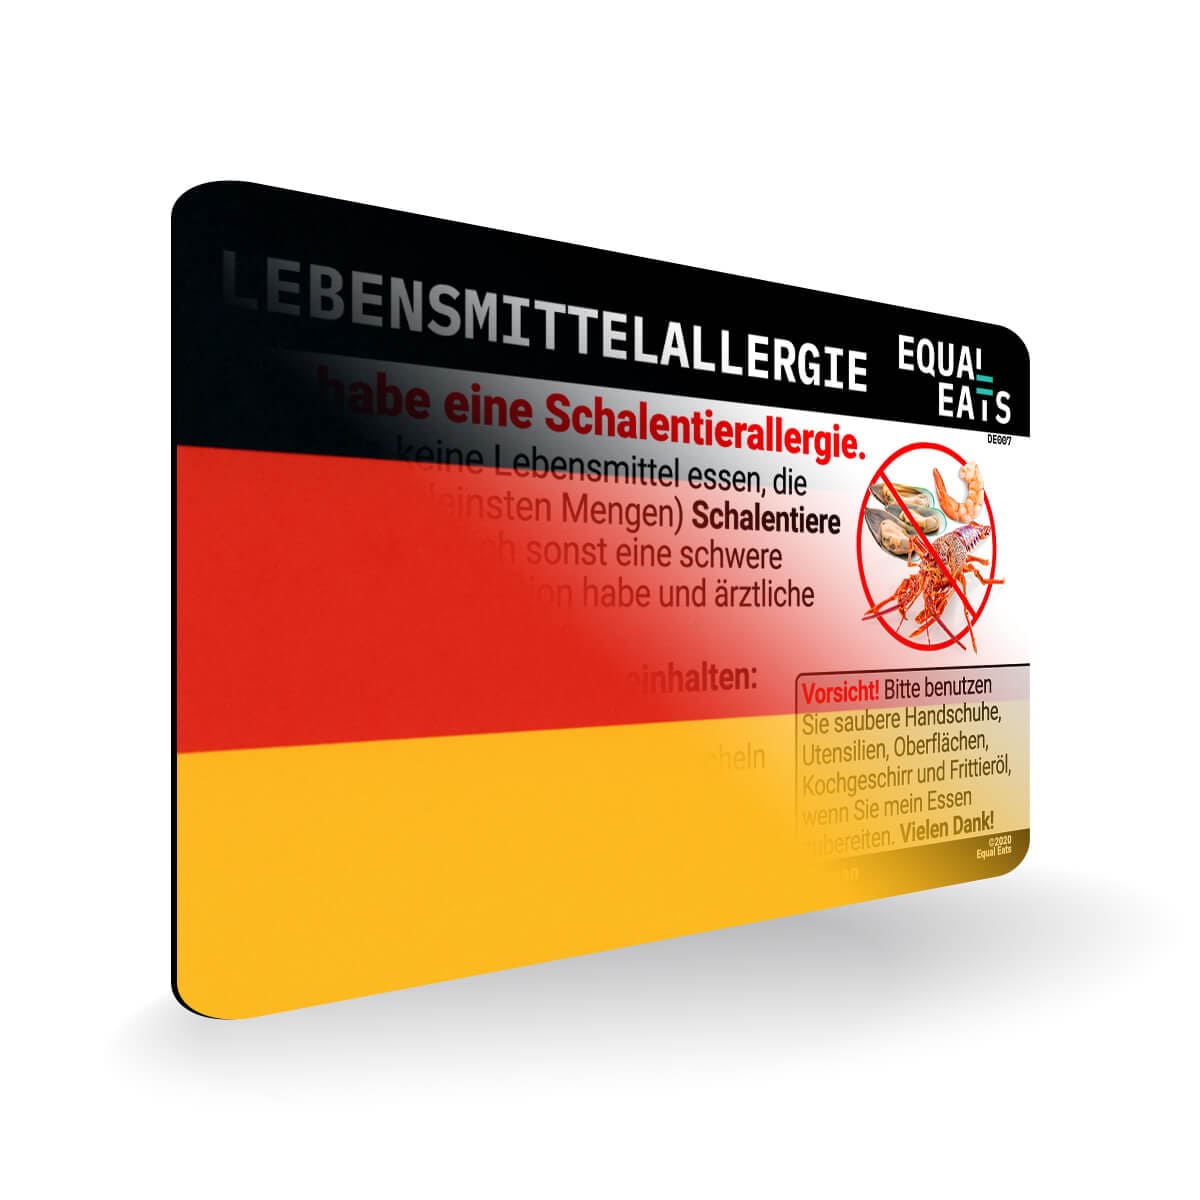 Shellfish Allergy in German. Shellfish Allergy Card for Germany